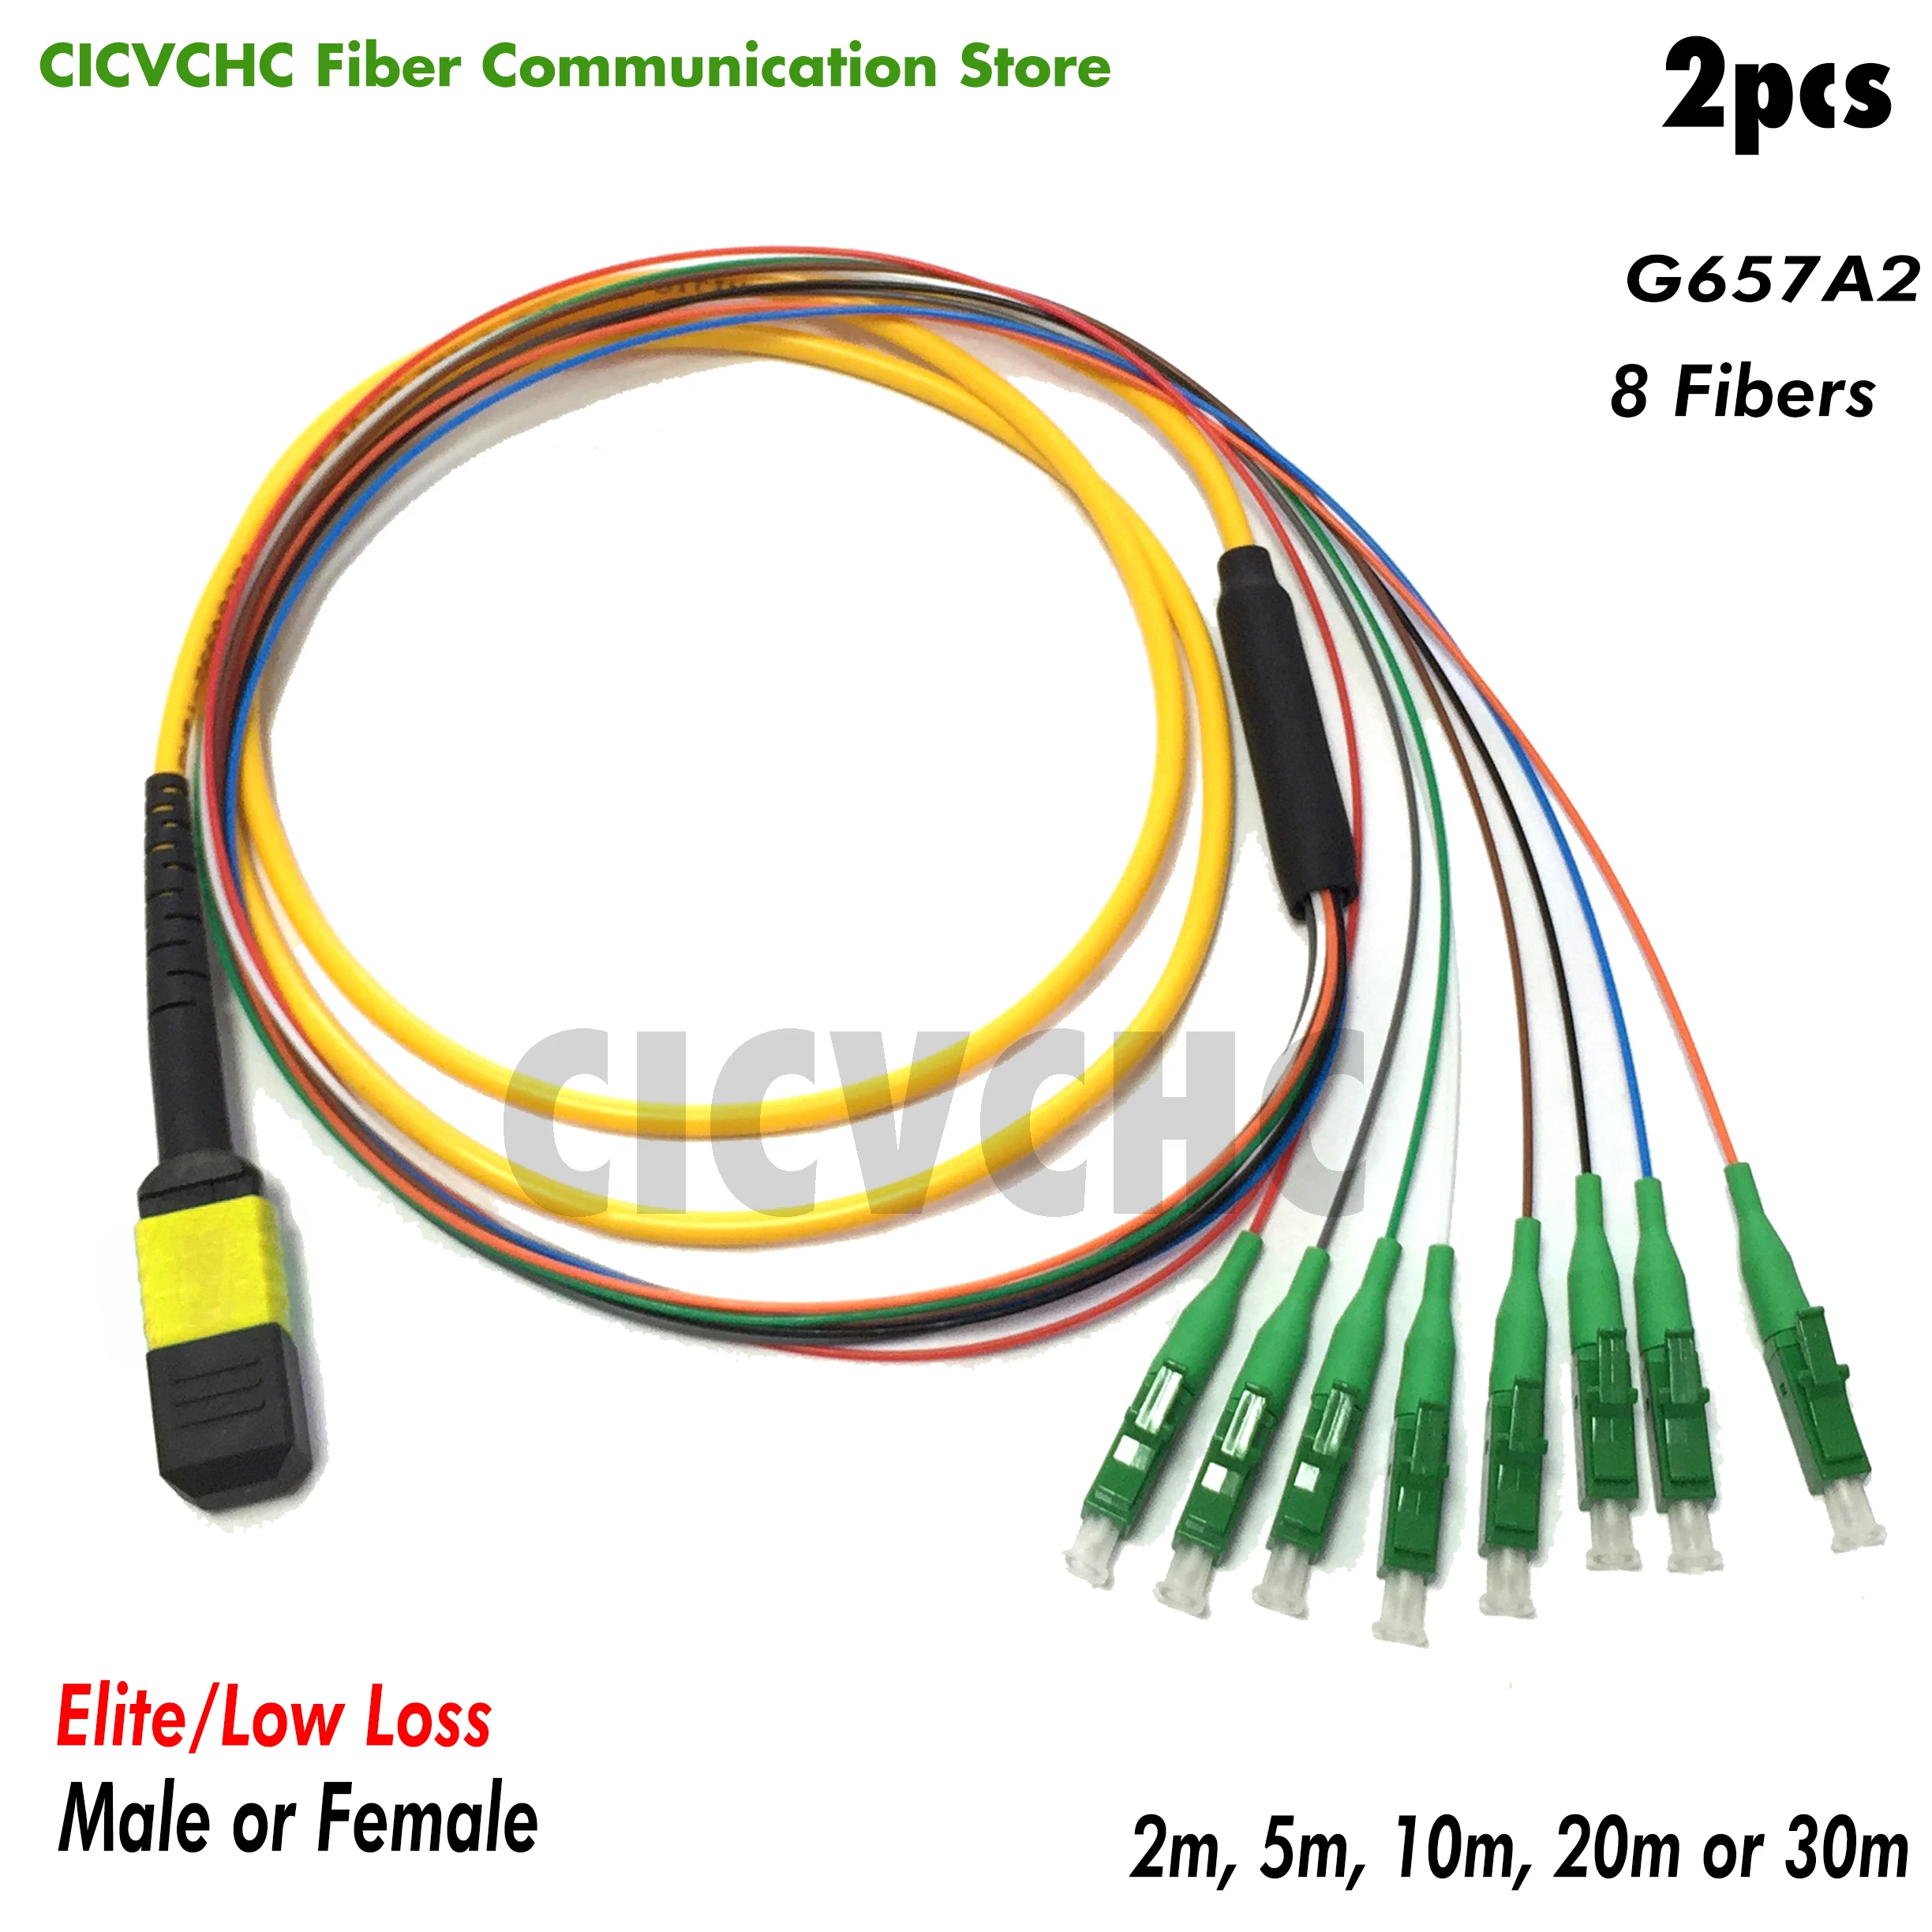 2pcs 8 fibers-MPO/APC Fanout LC/APC -G657A2-Elite/Low loss-Male/Female with 0.9mm-2m to 10m/MPO Assembly